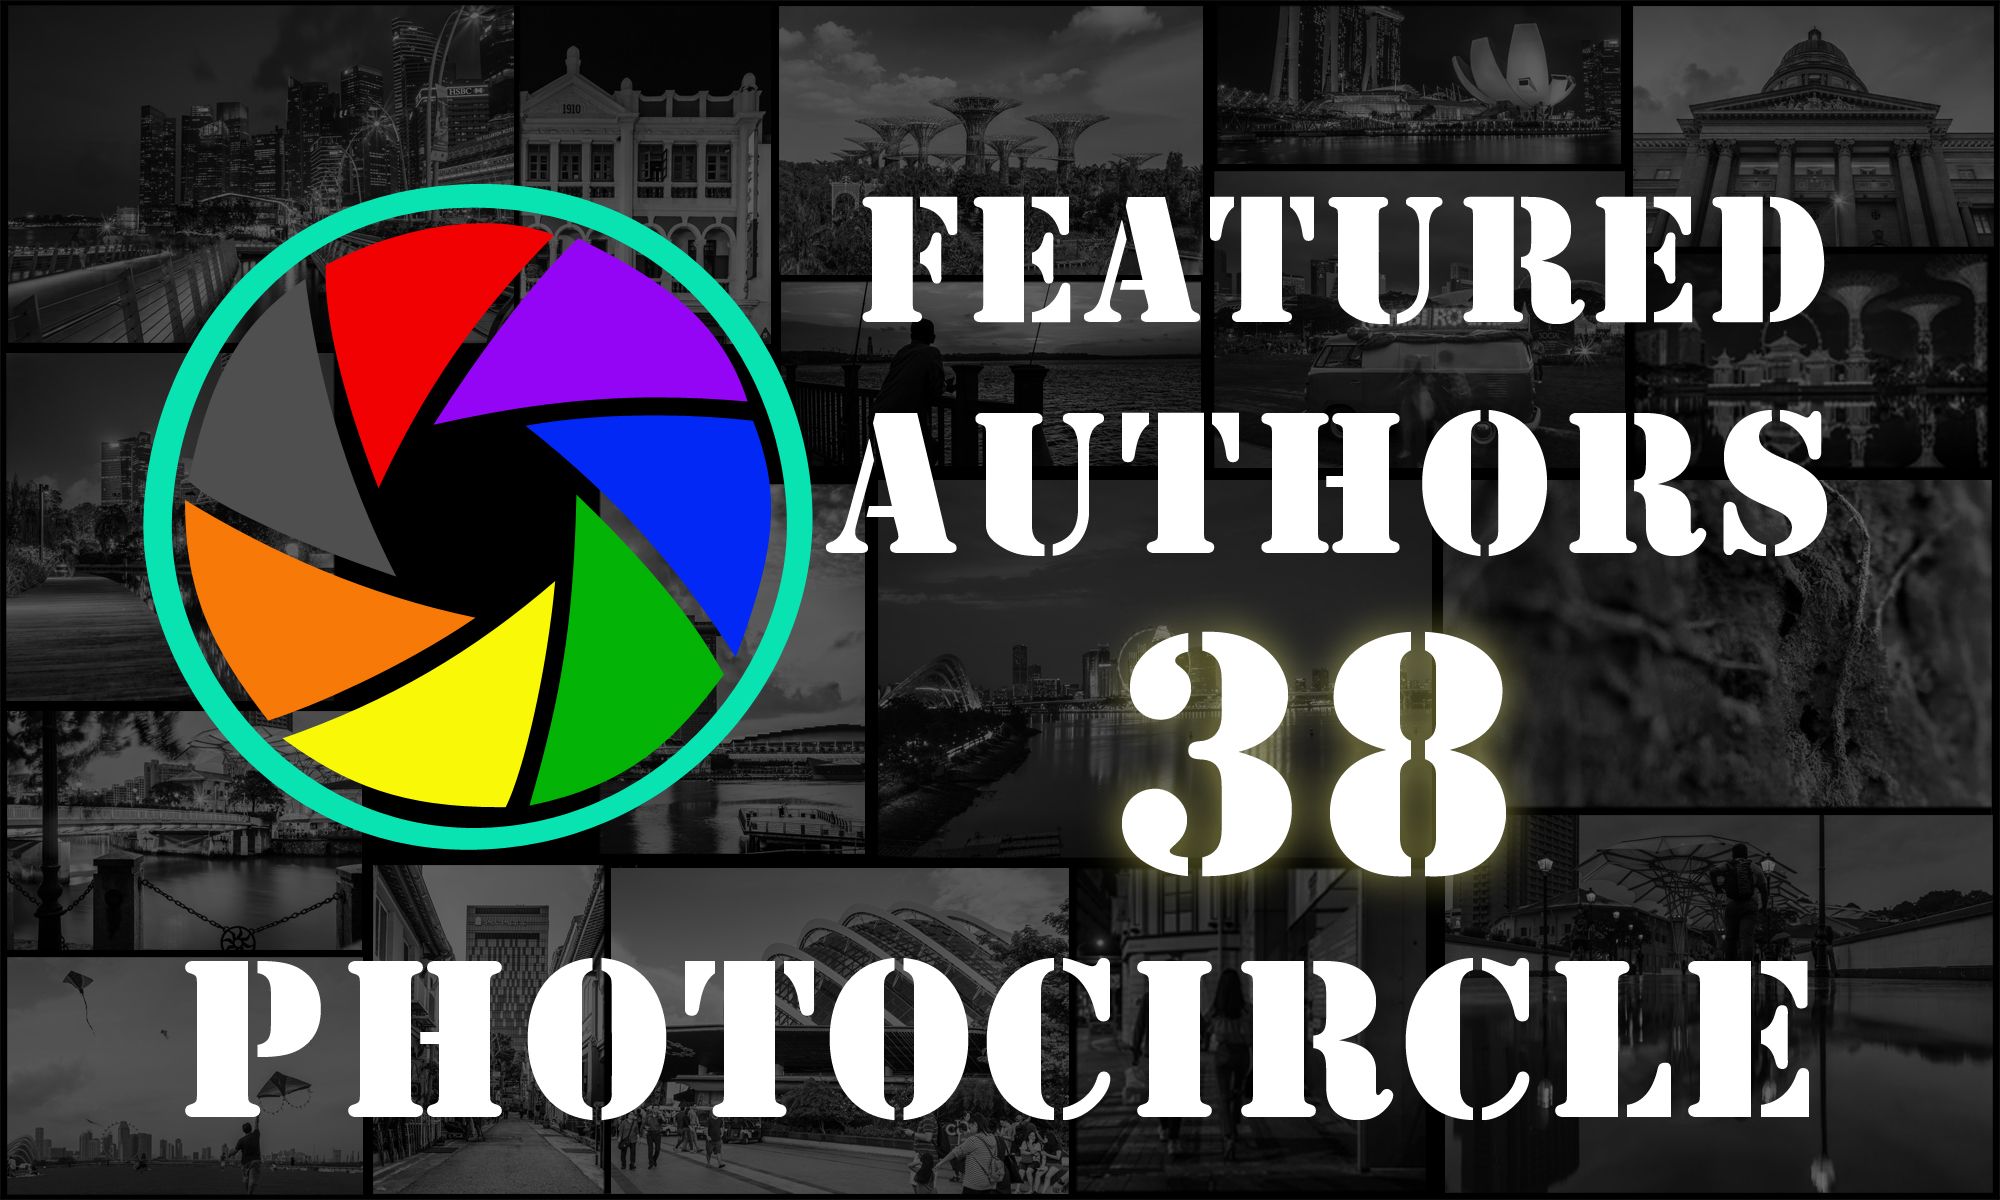 38-PC thumbnail - daily authors.jpg